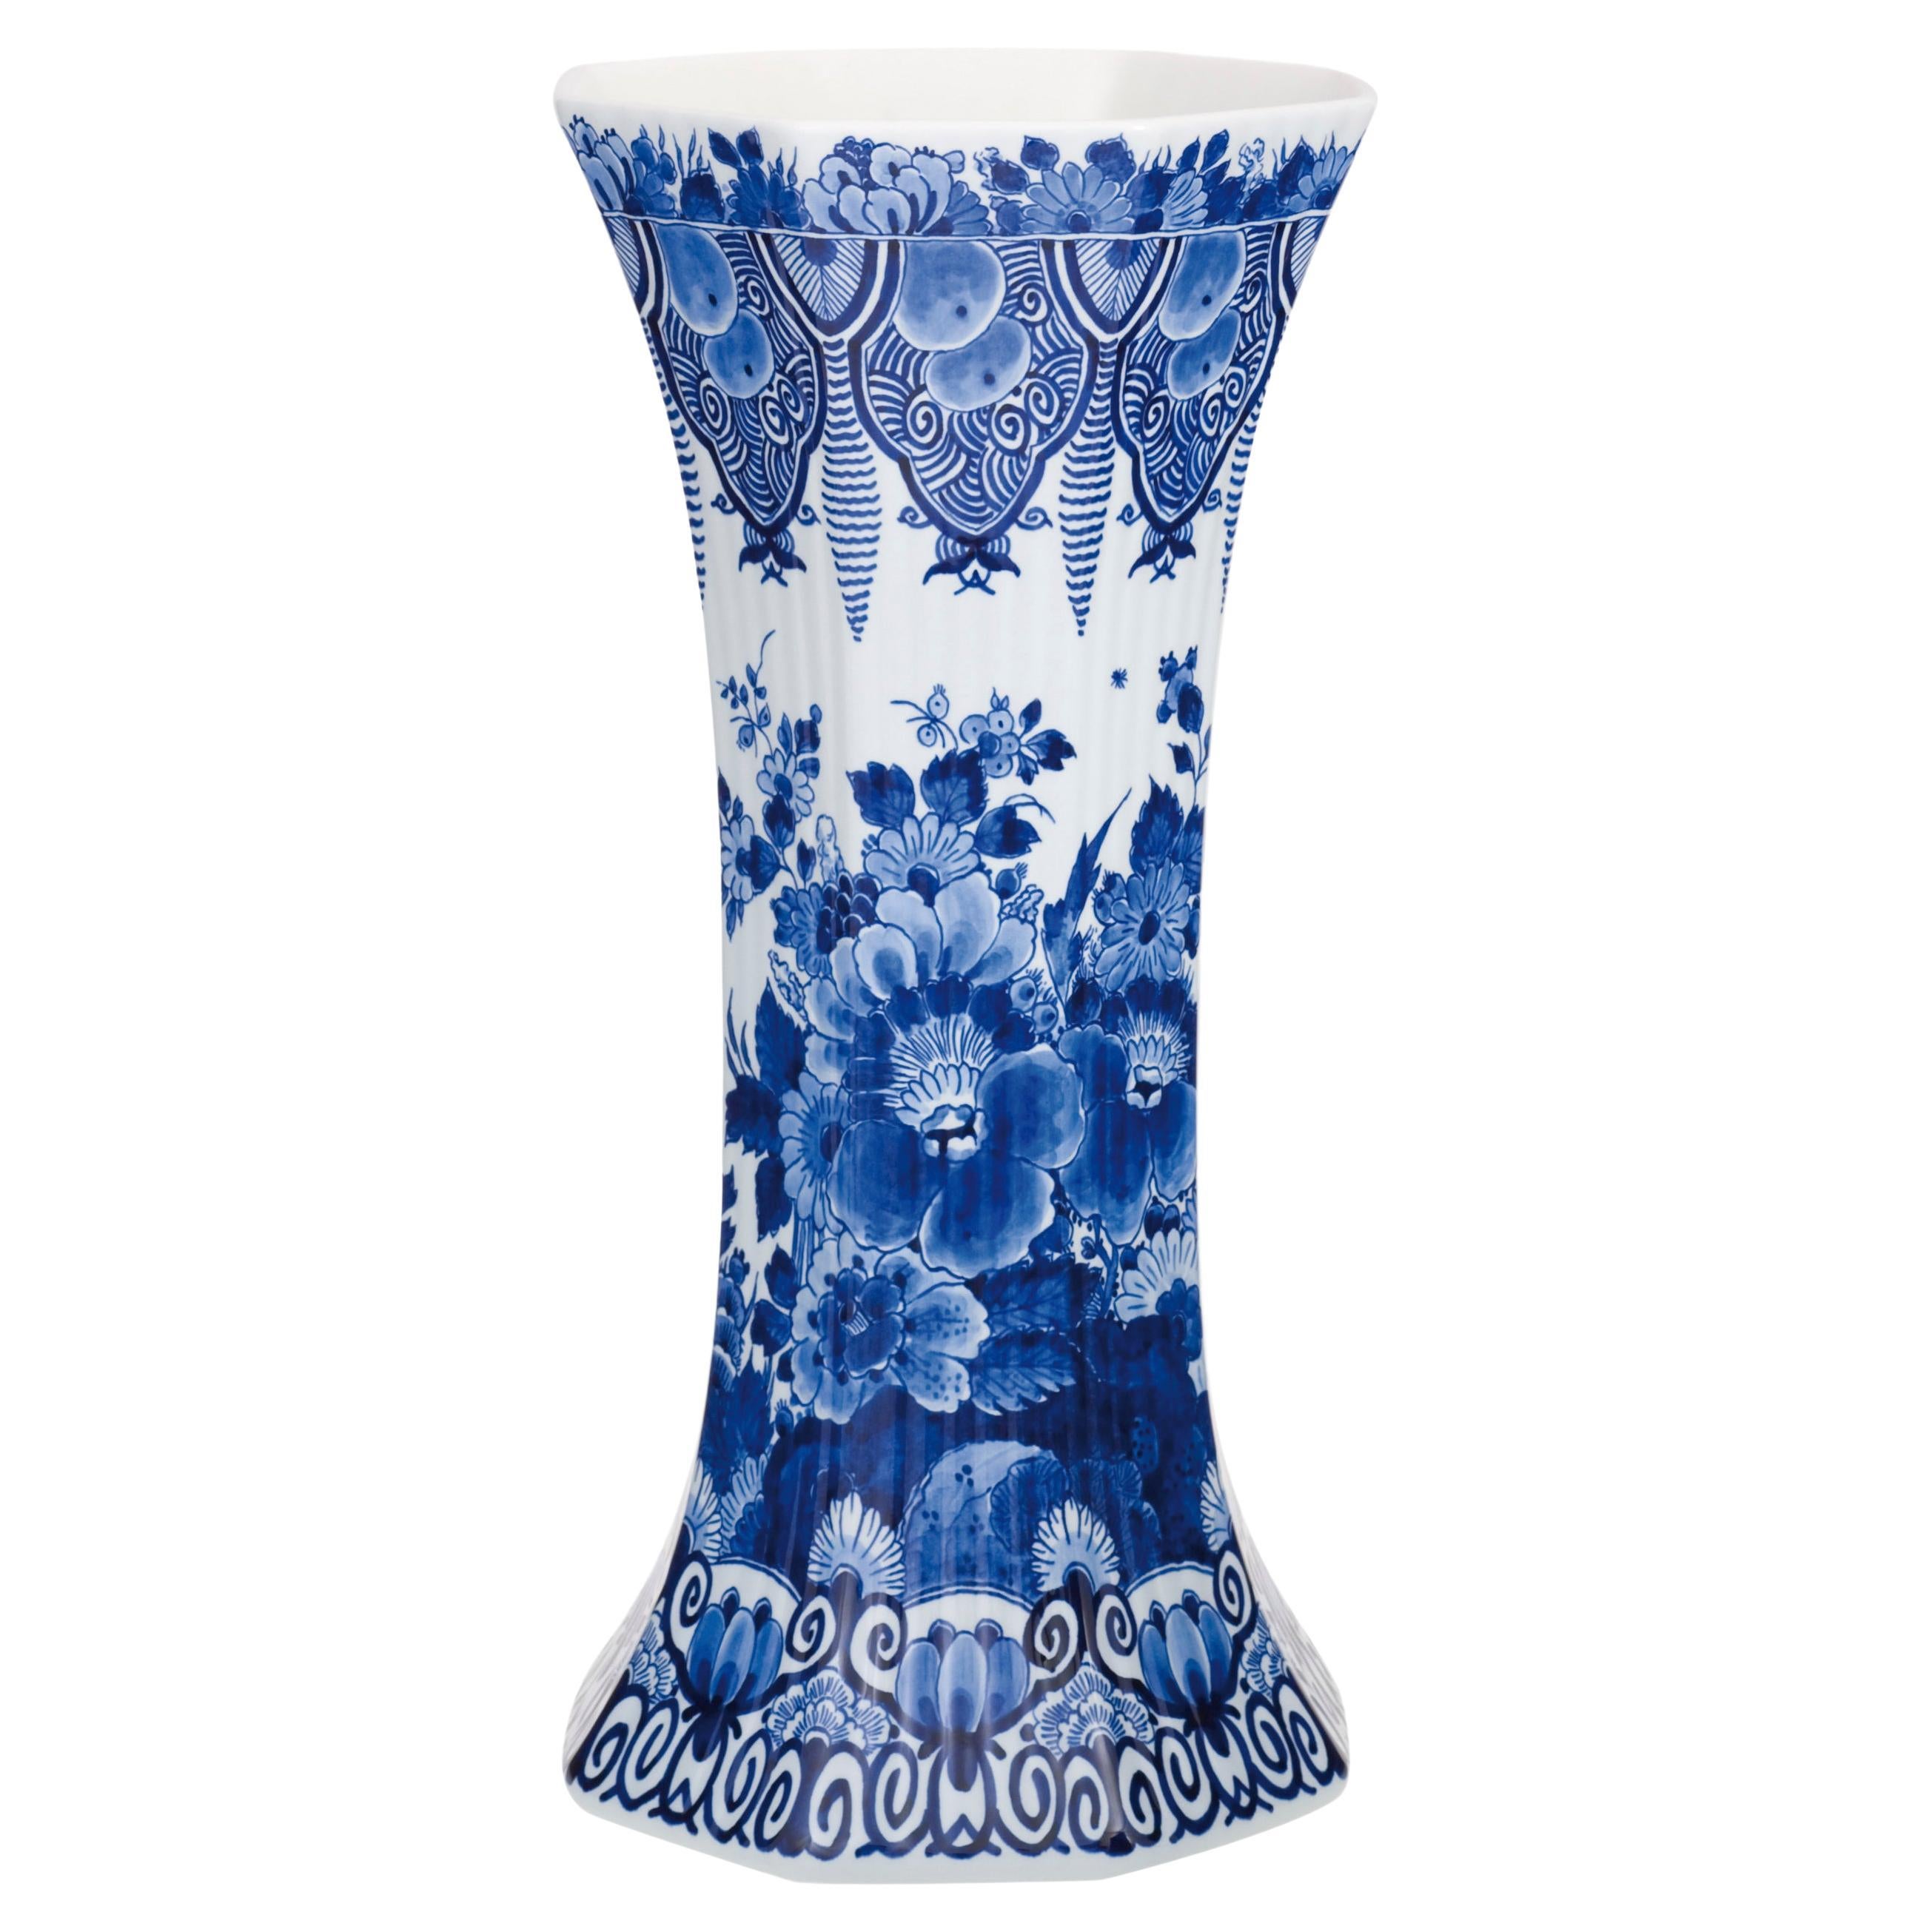 Dutch Delft Blue handpainted ceramic vase by Royal Delft, Original Blue collect. For Sale